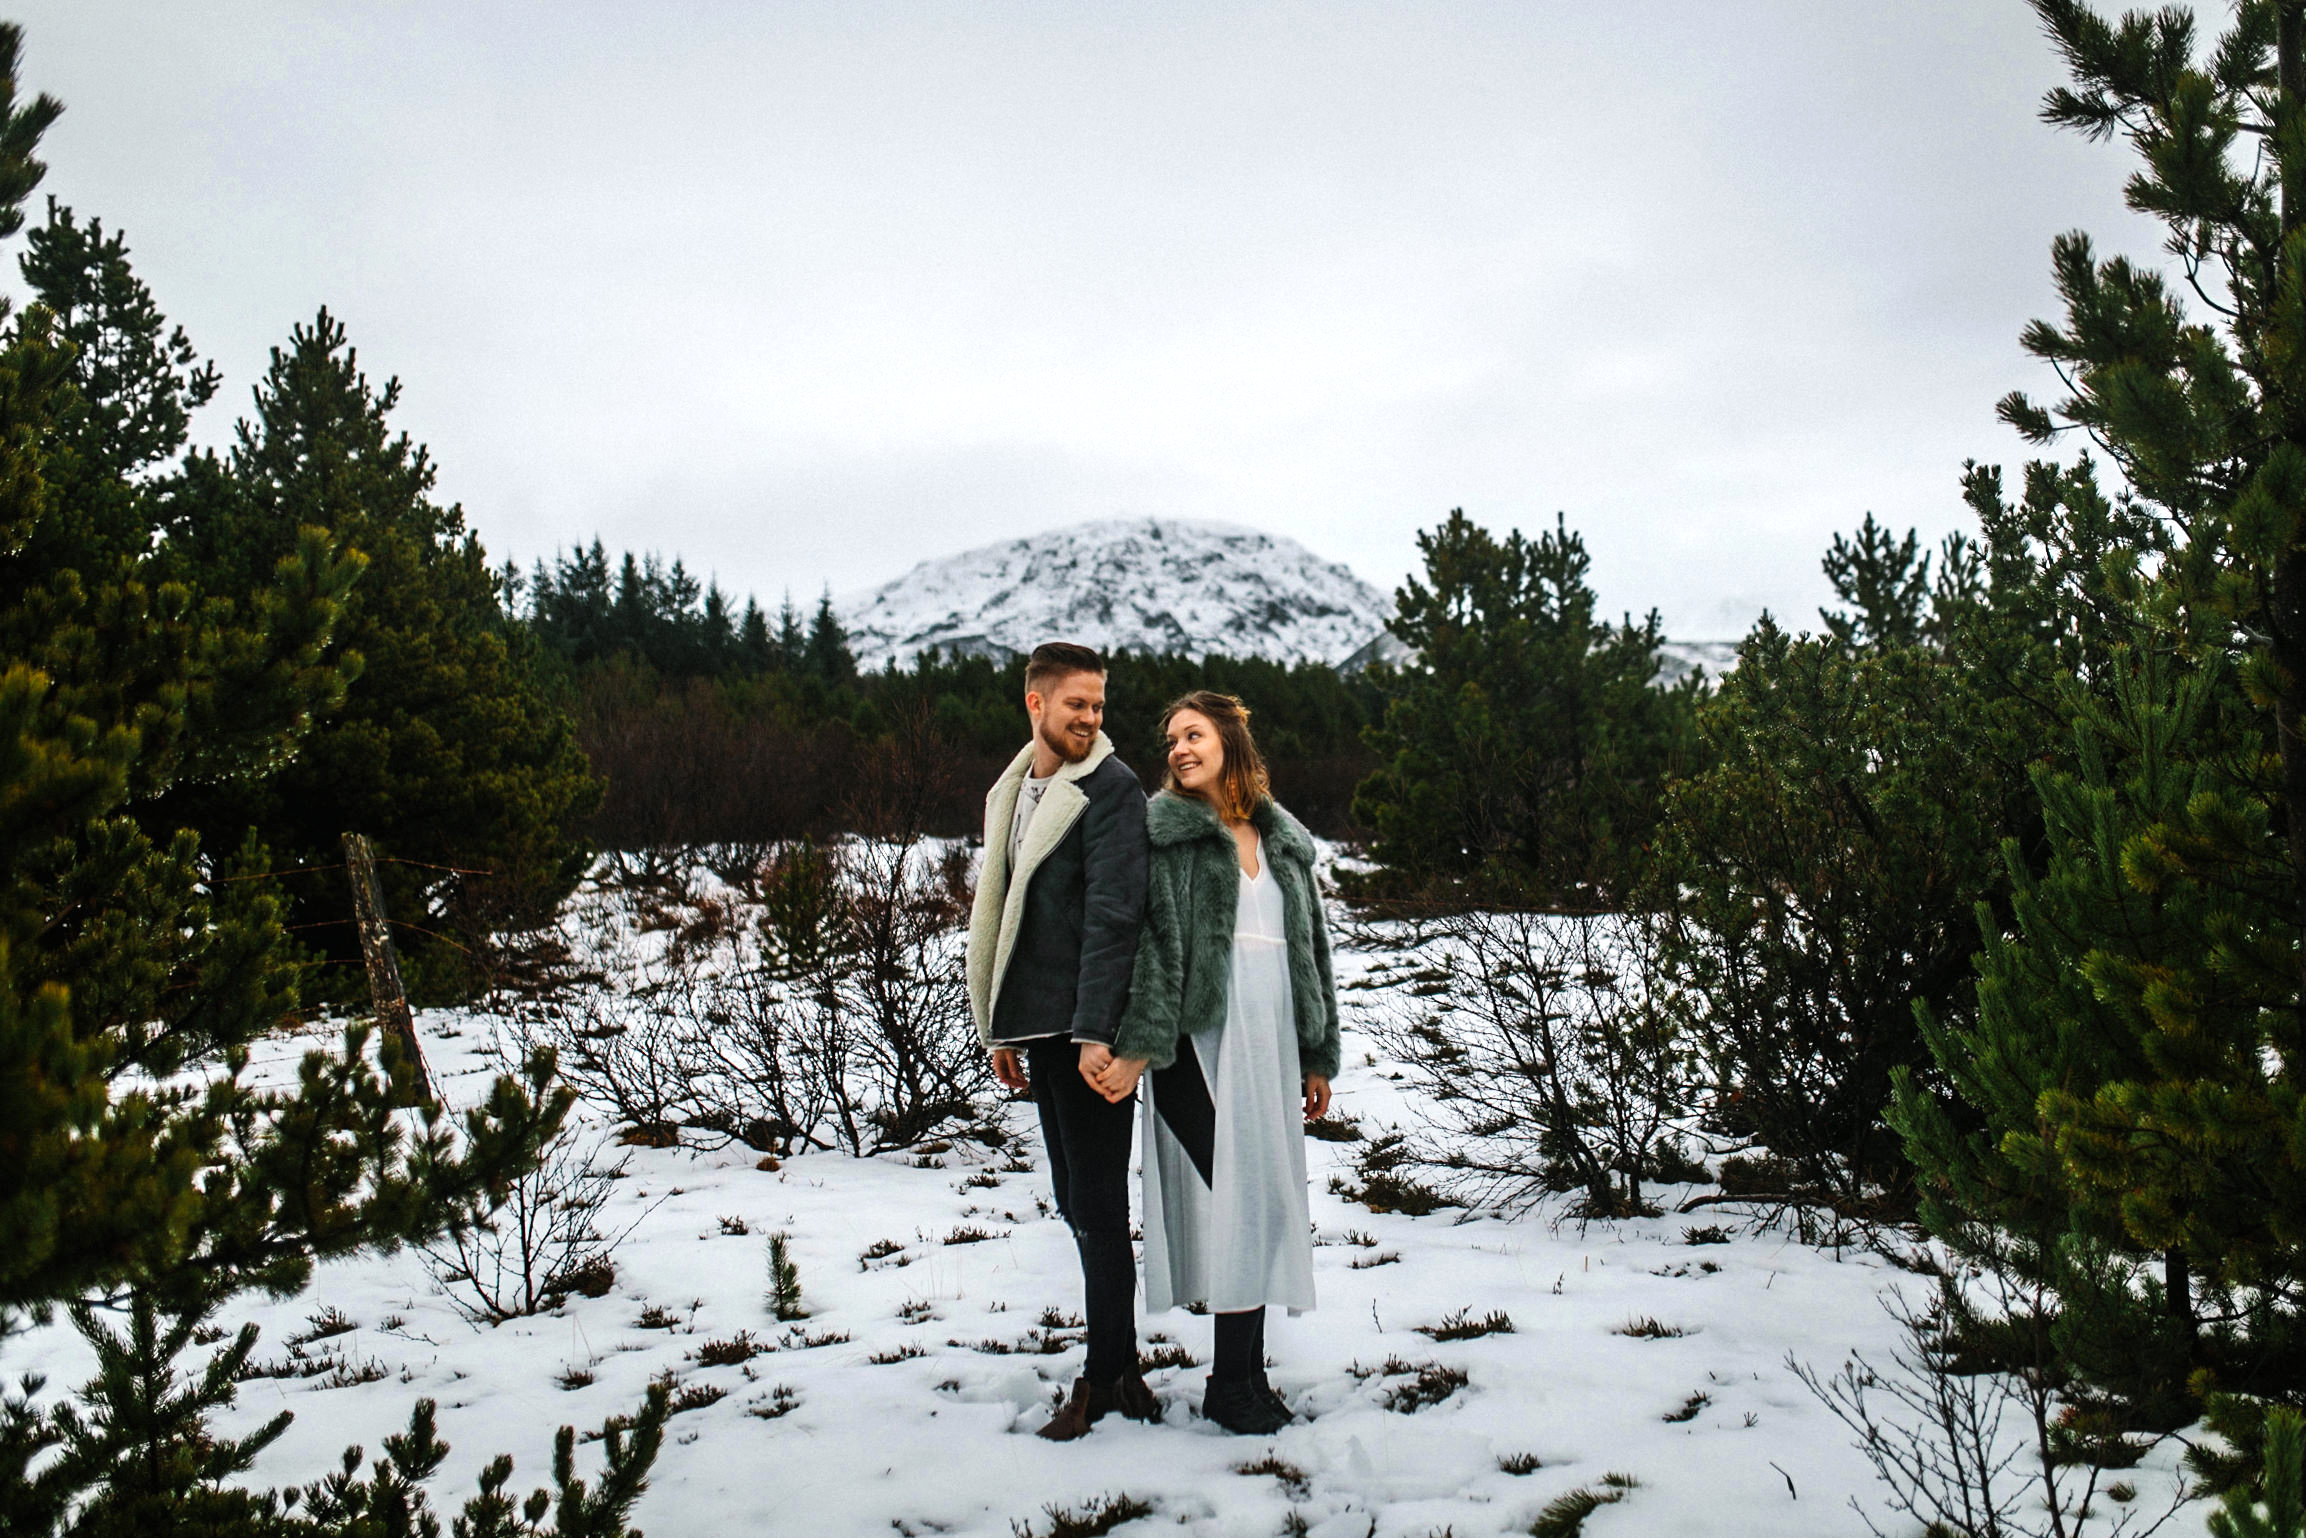 just-us-2-1 Dagbjört & Aron (Just us) // Iceland Engagement Photographer